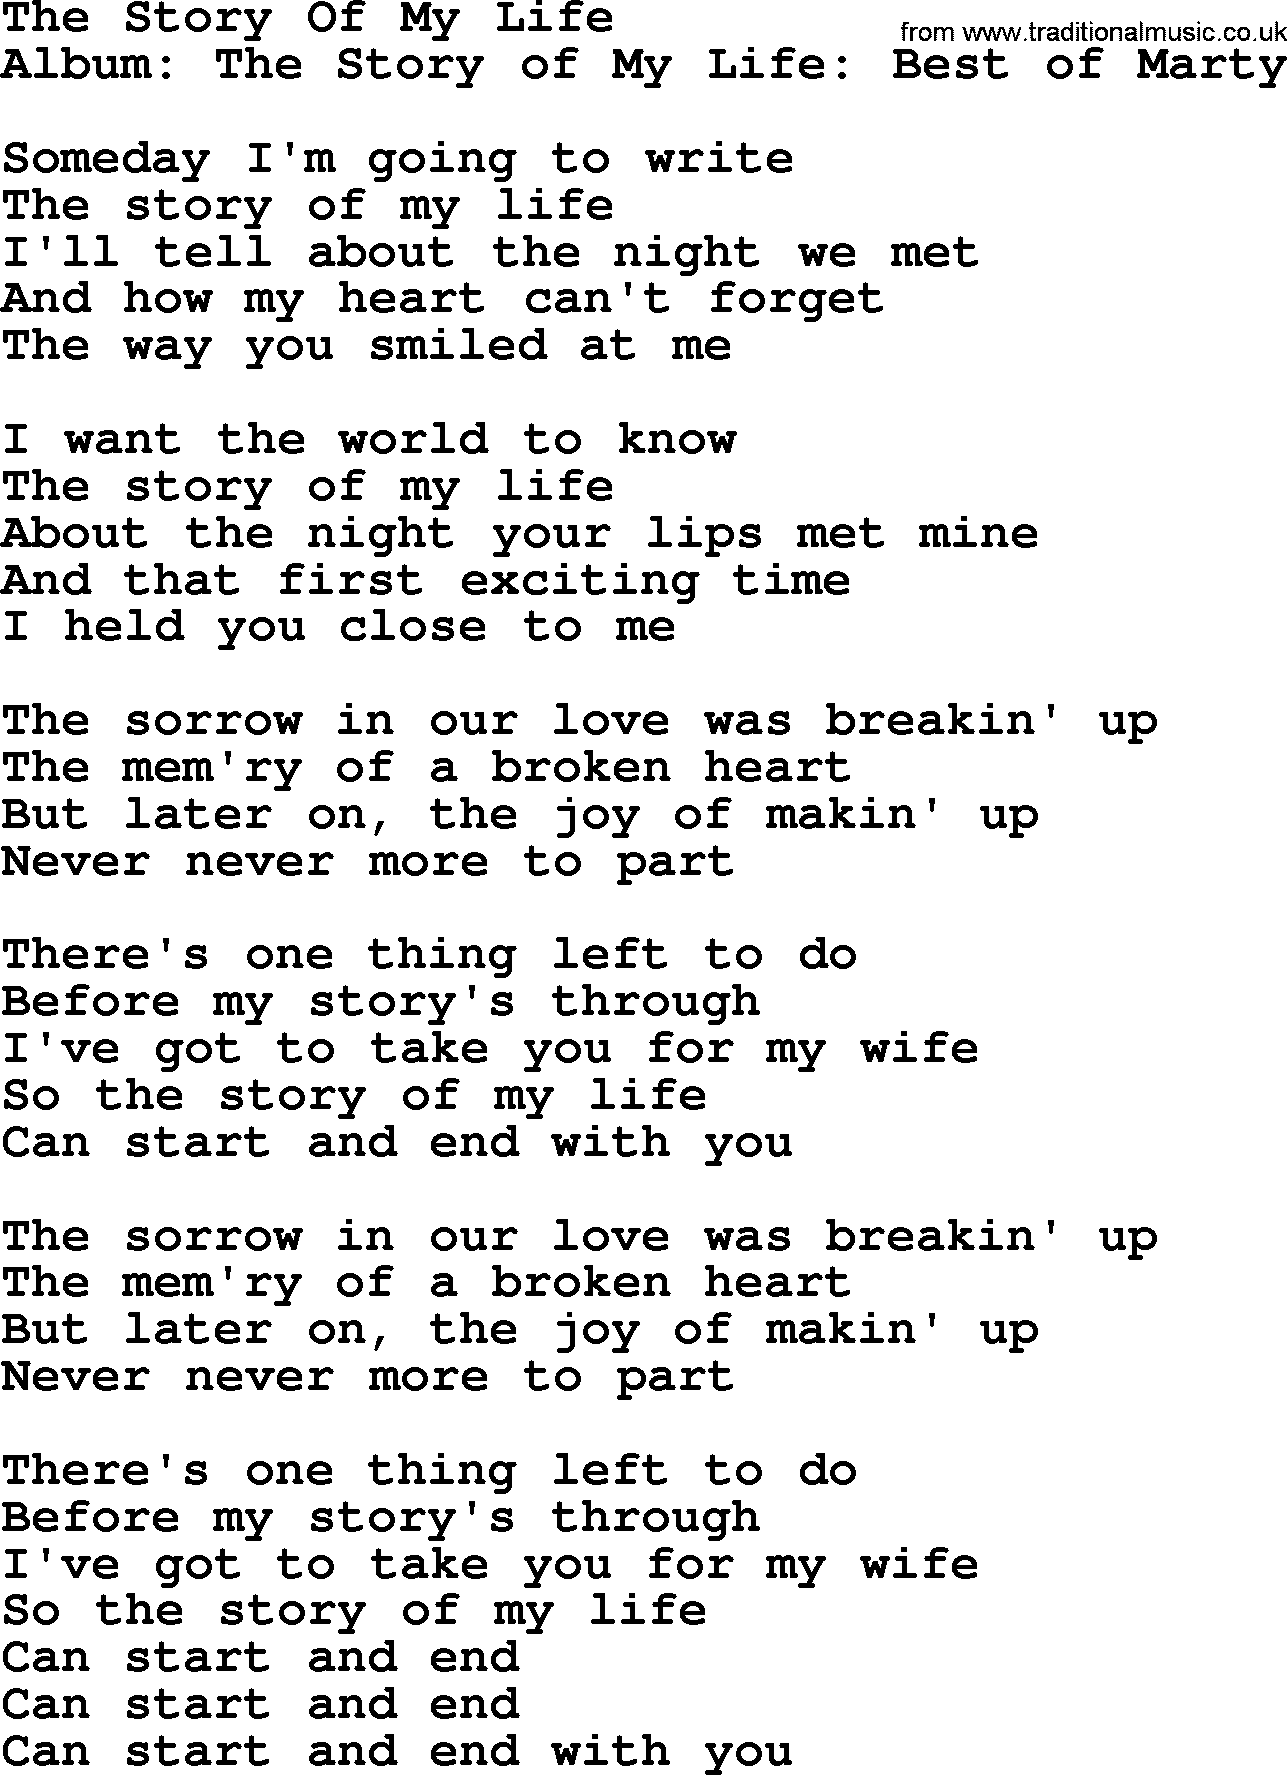 Marty Robbins song: The Story Of My Life, lyrics